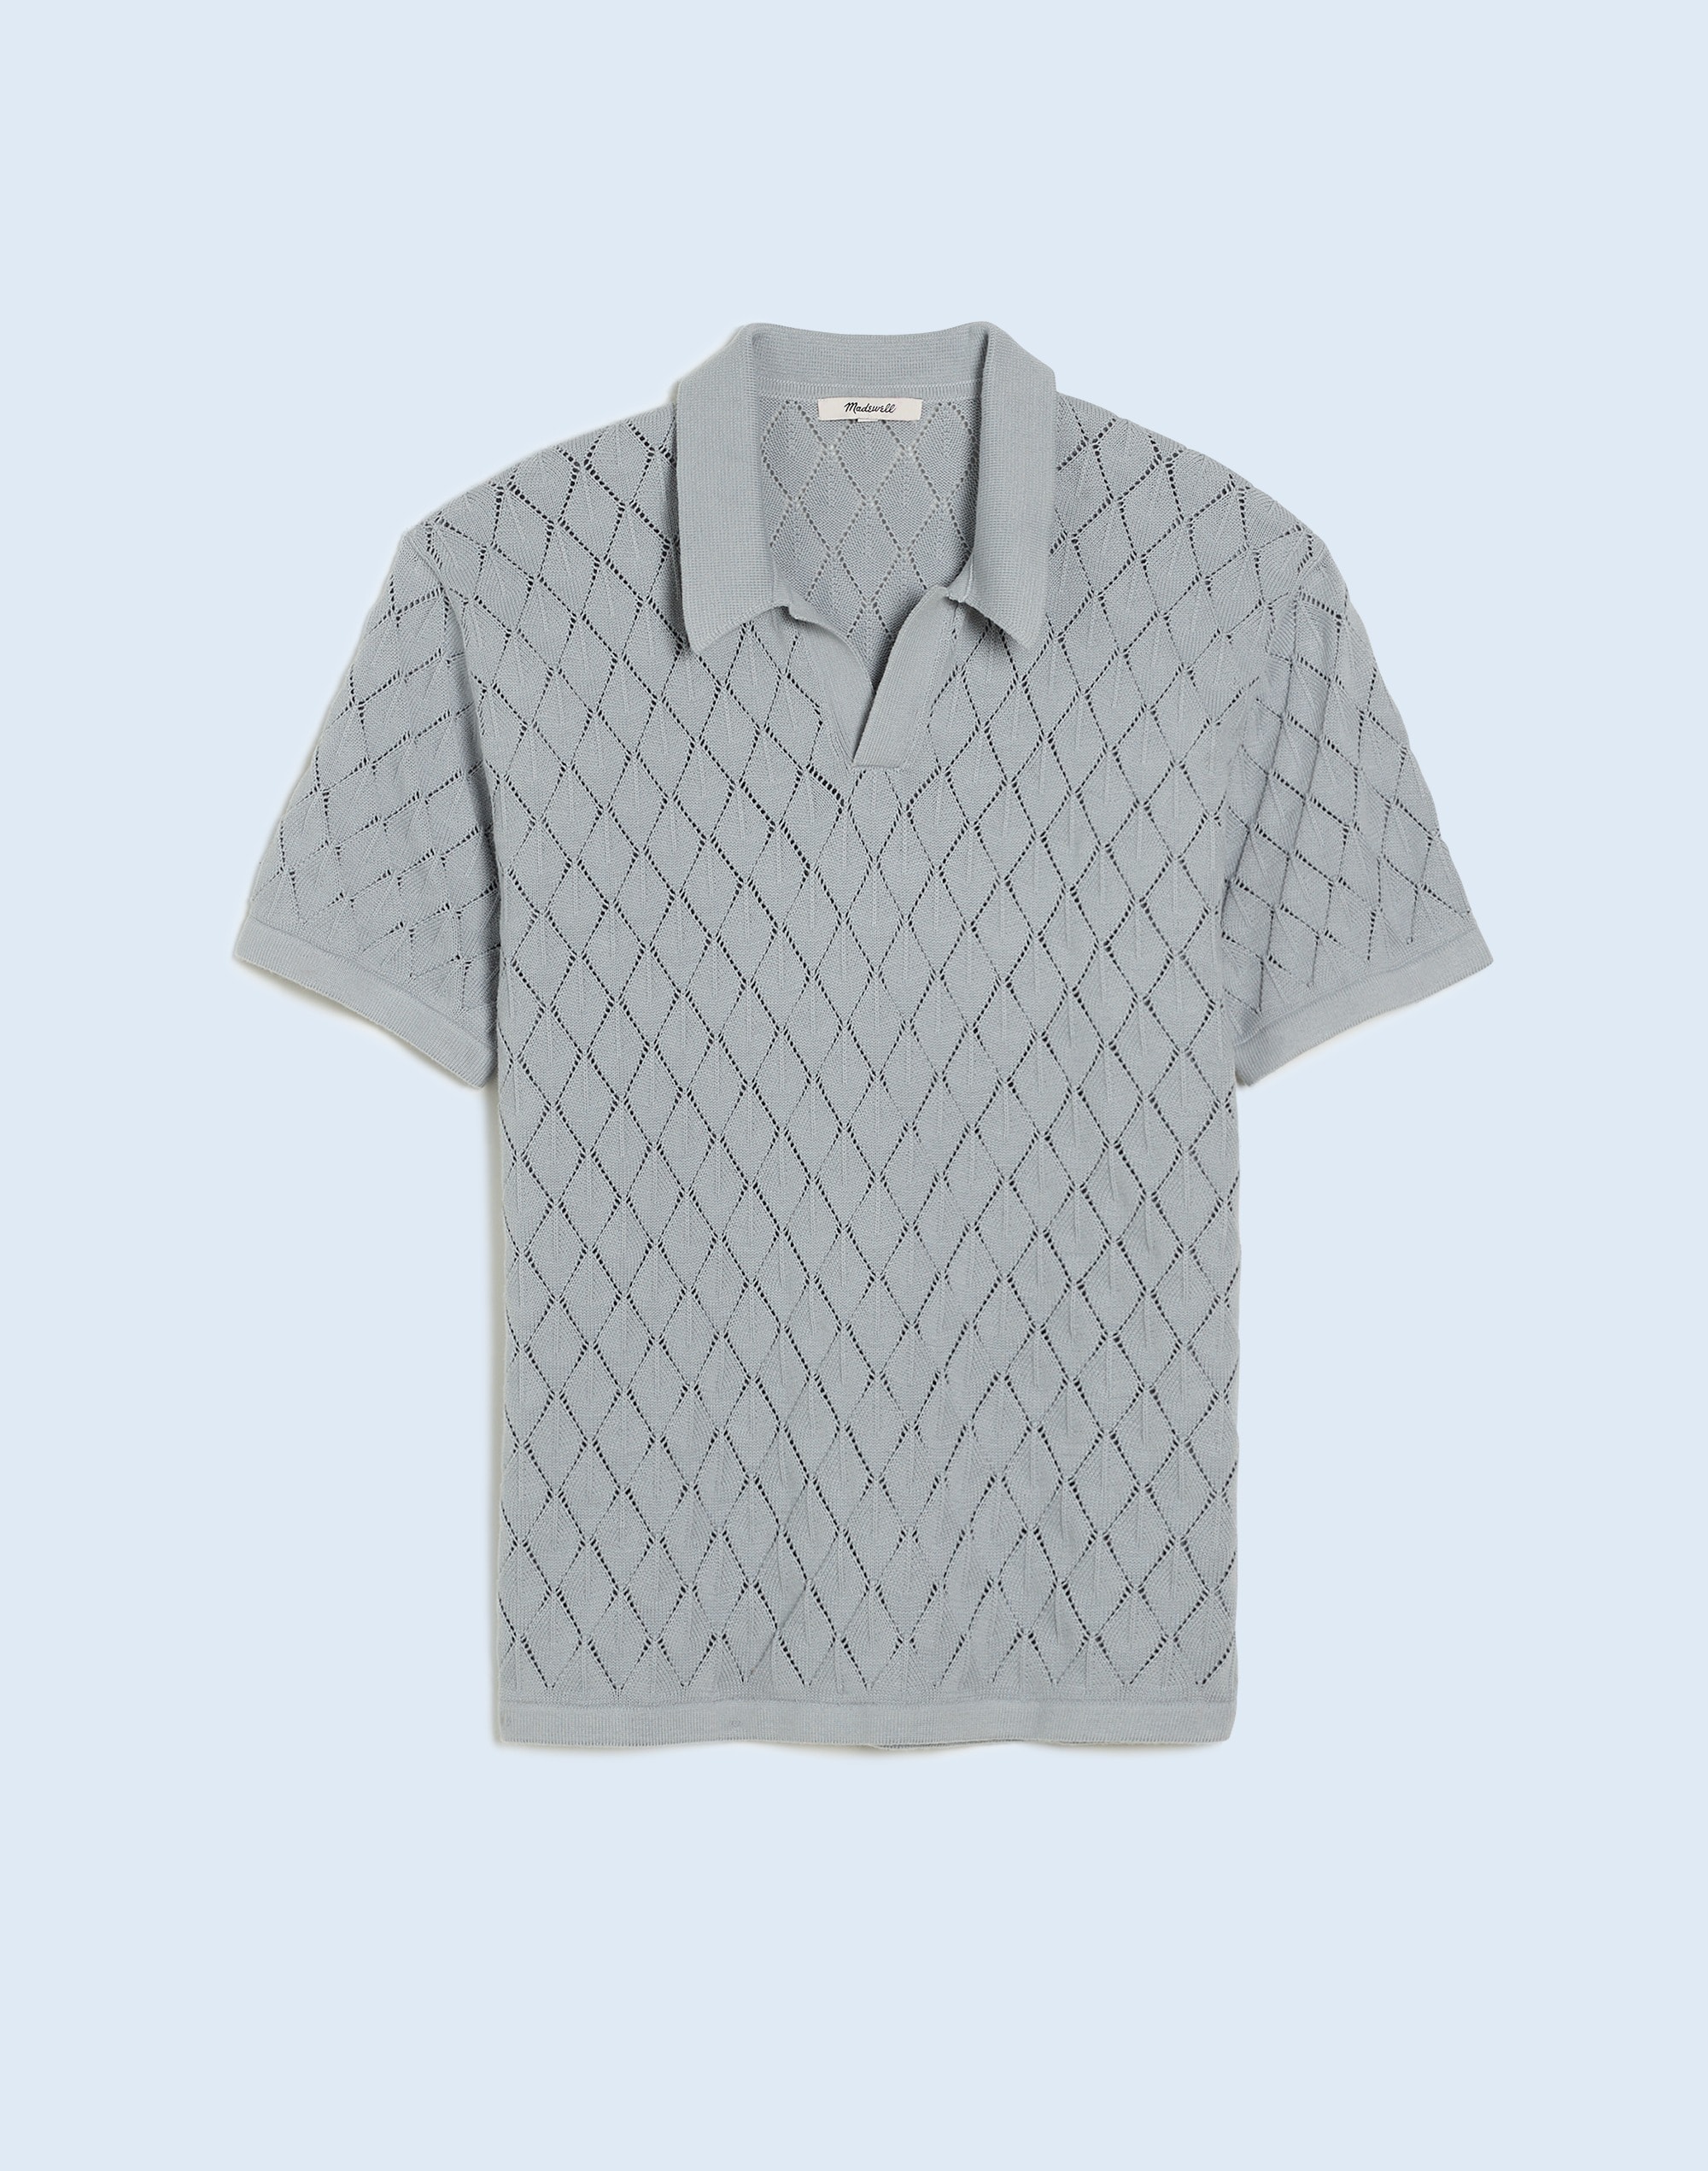 Johnny-Collar Sweater Polo Shirt Diamond Stitch